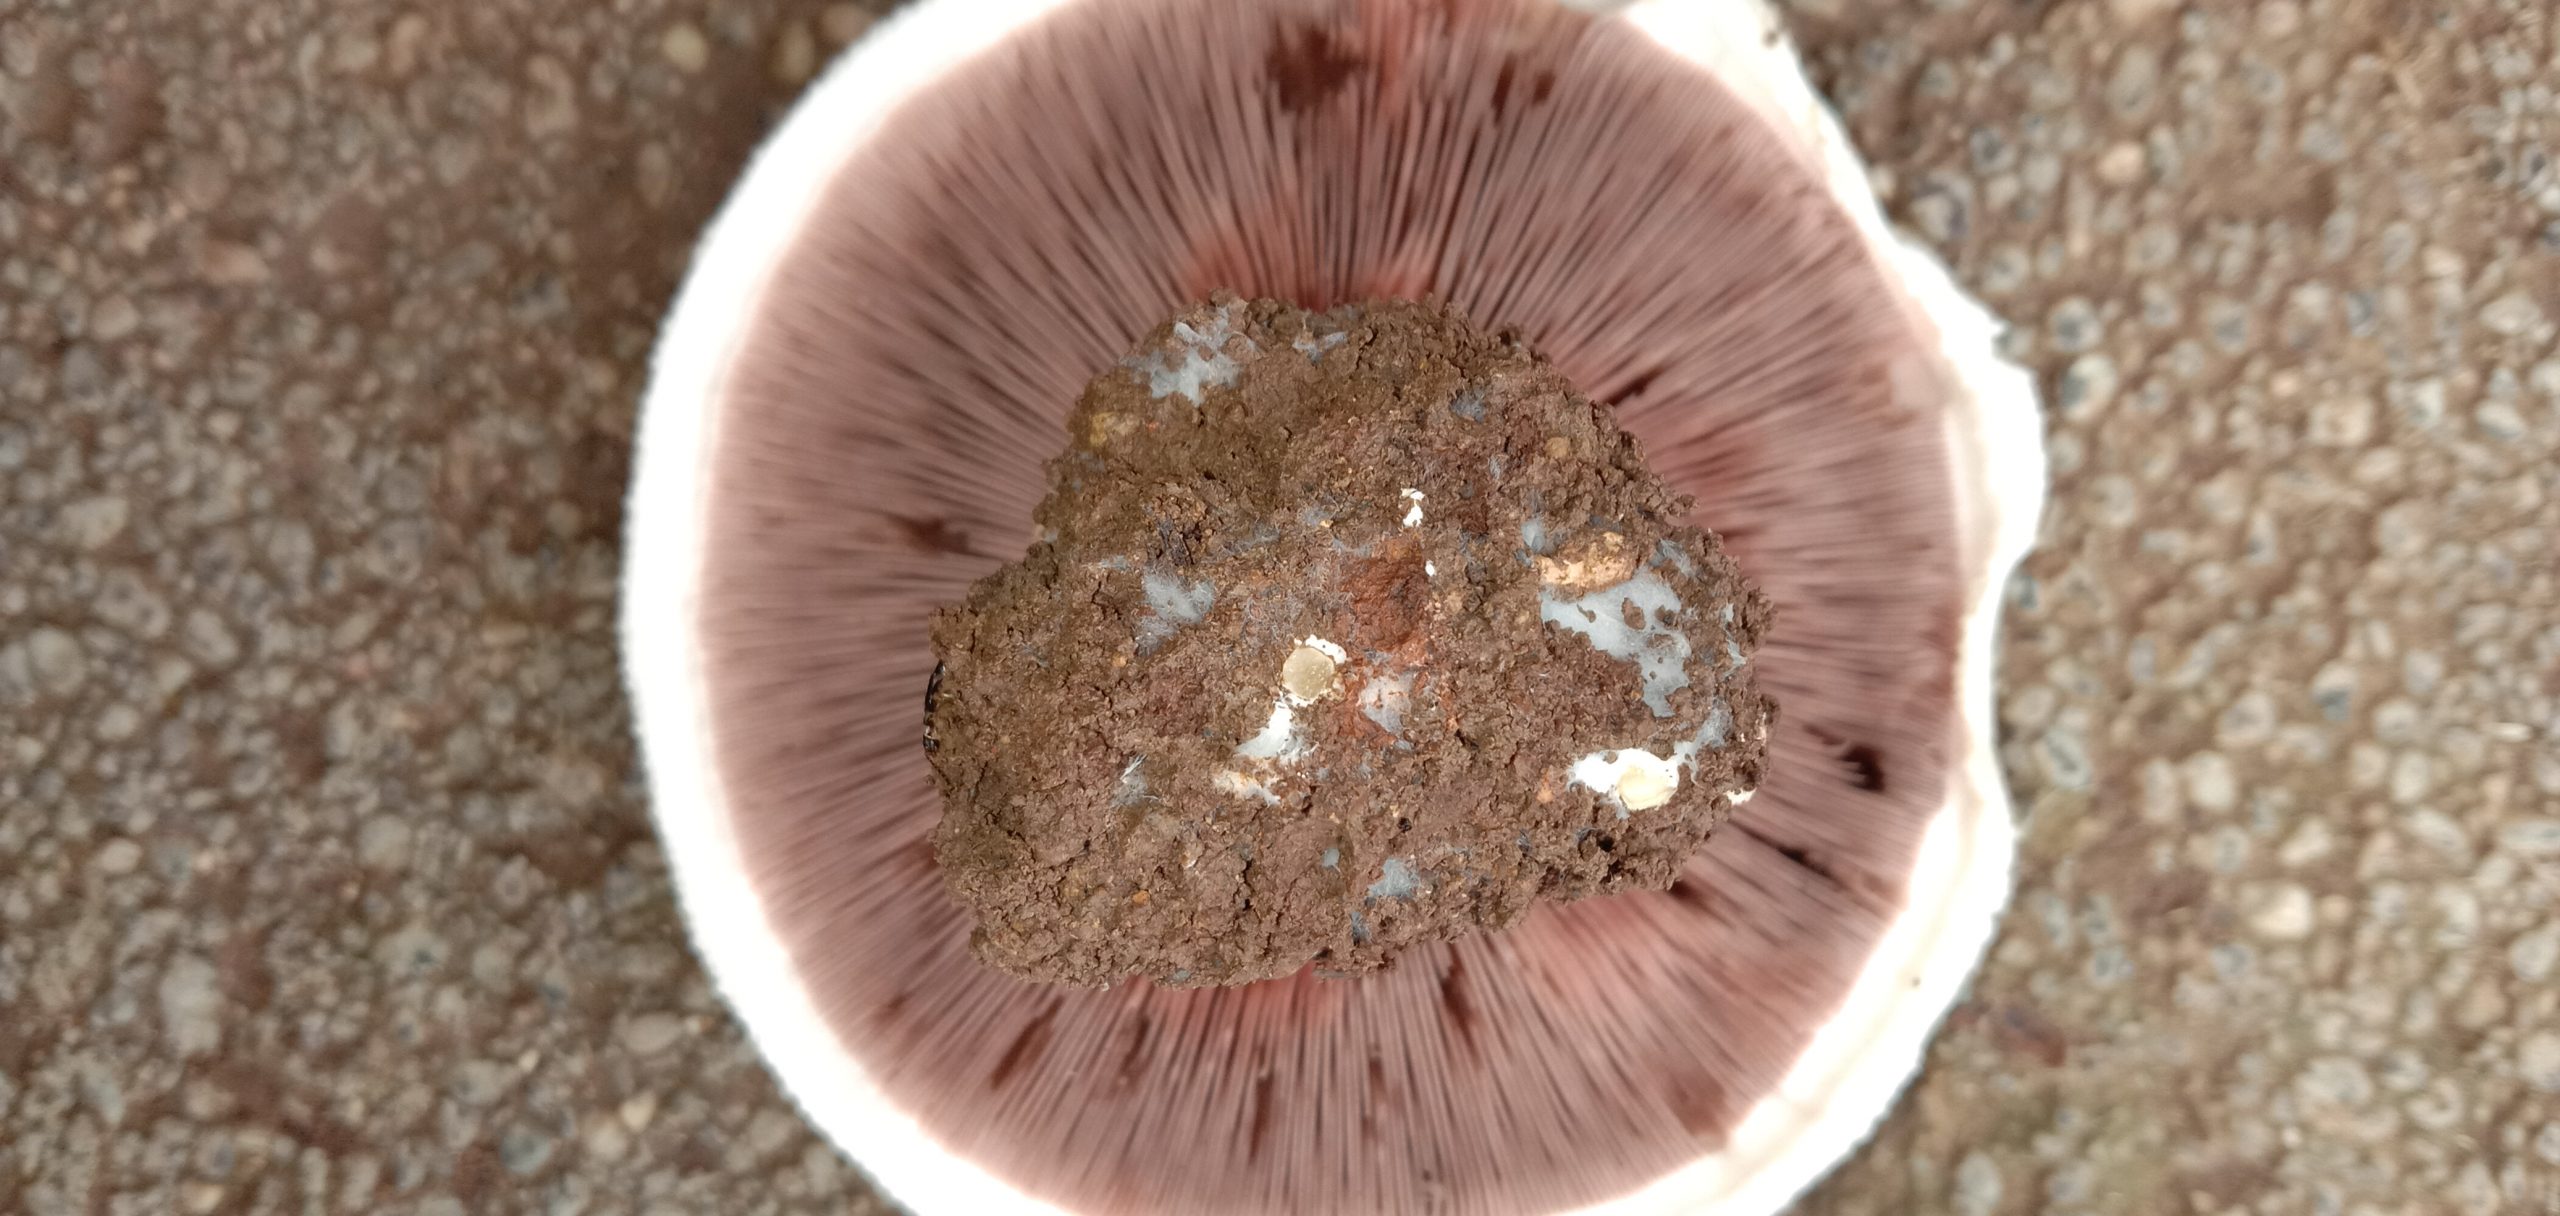 Closeup top view of mushroom